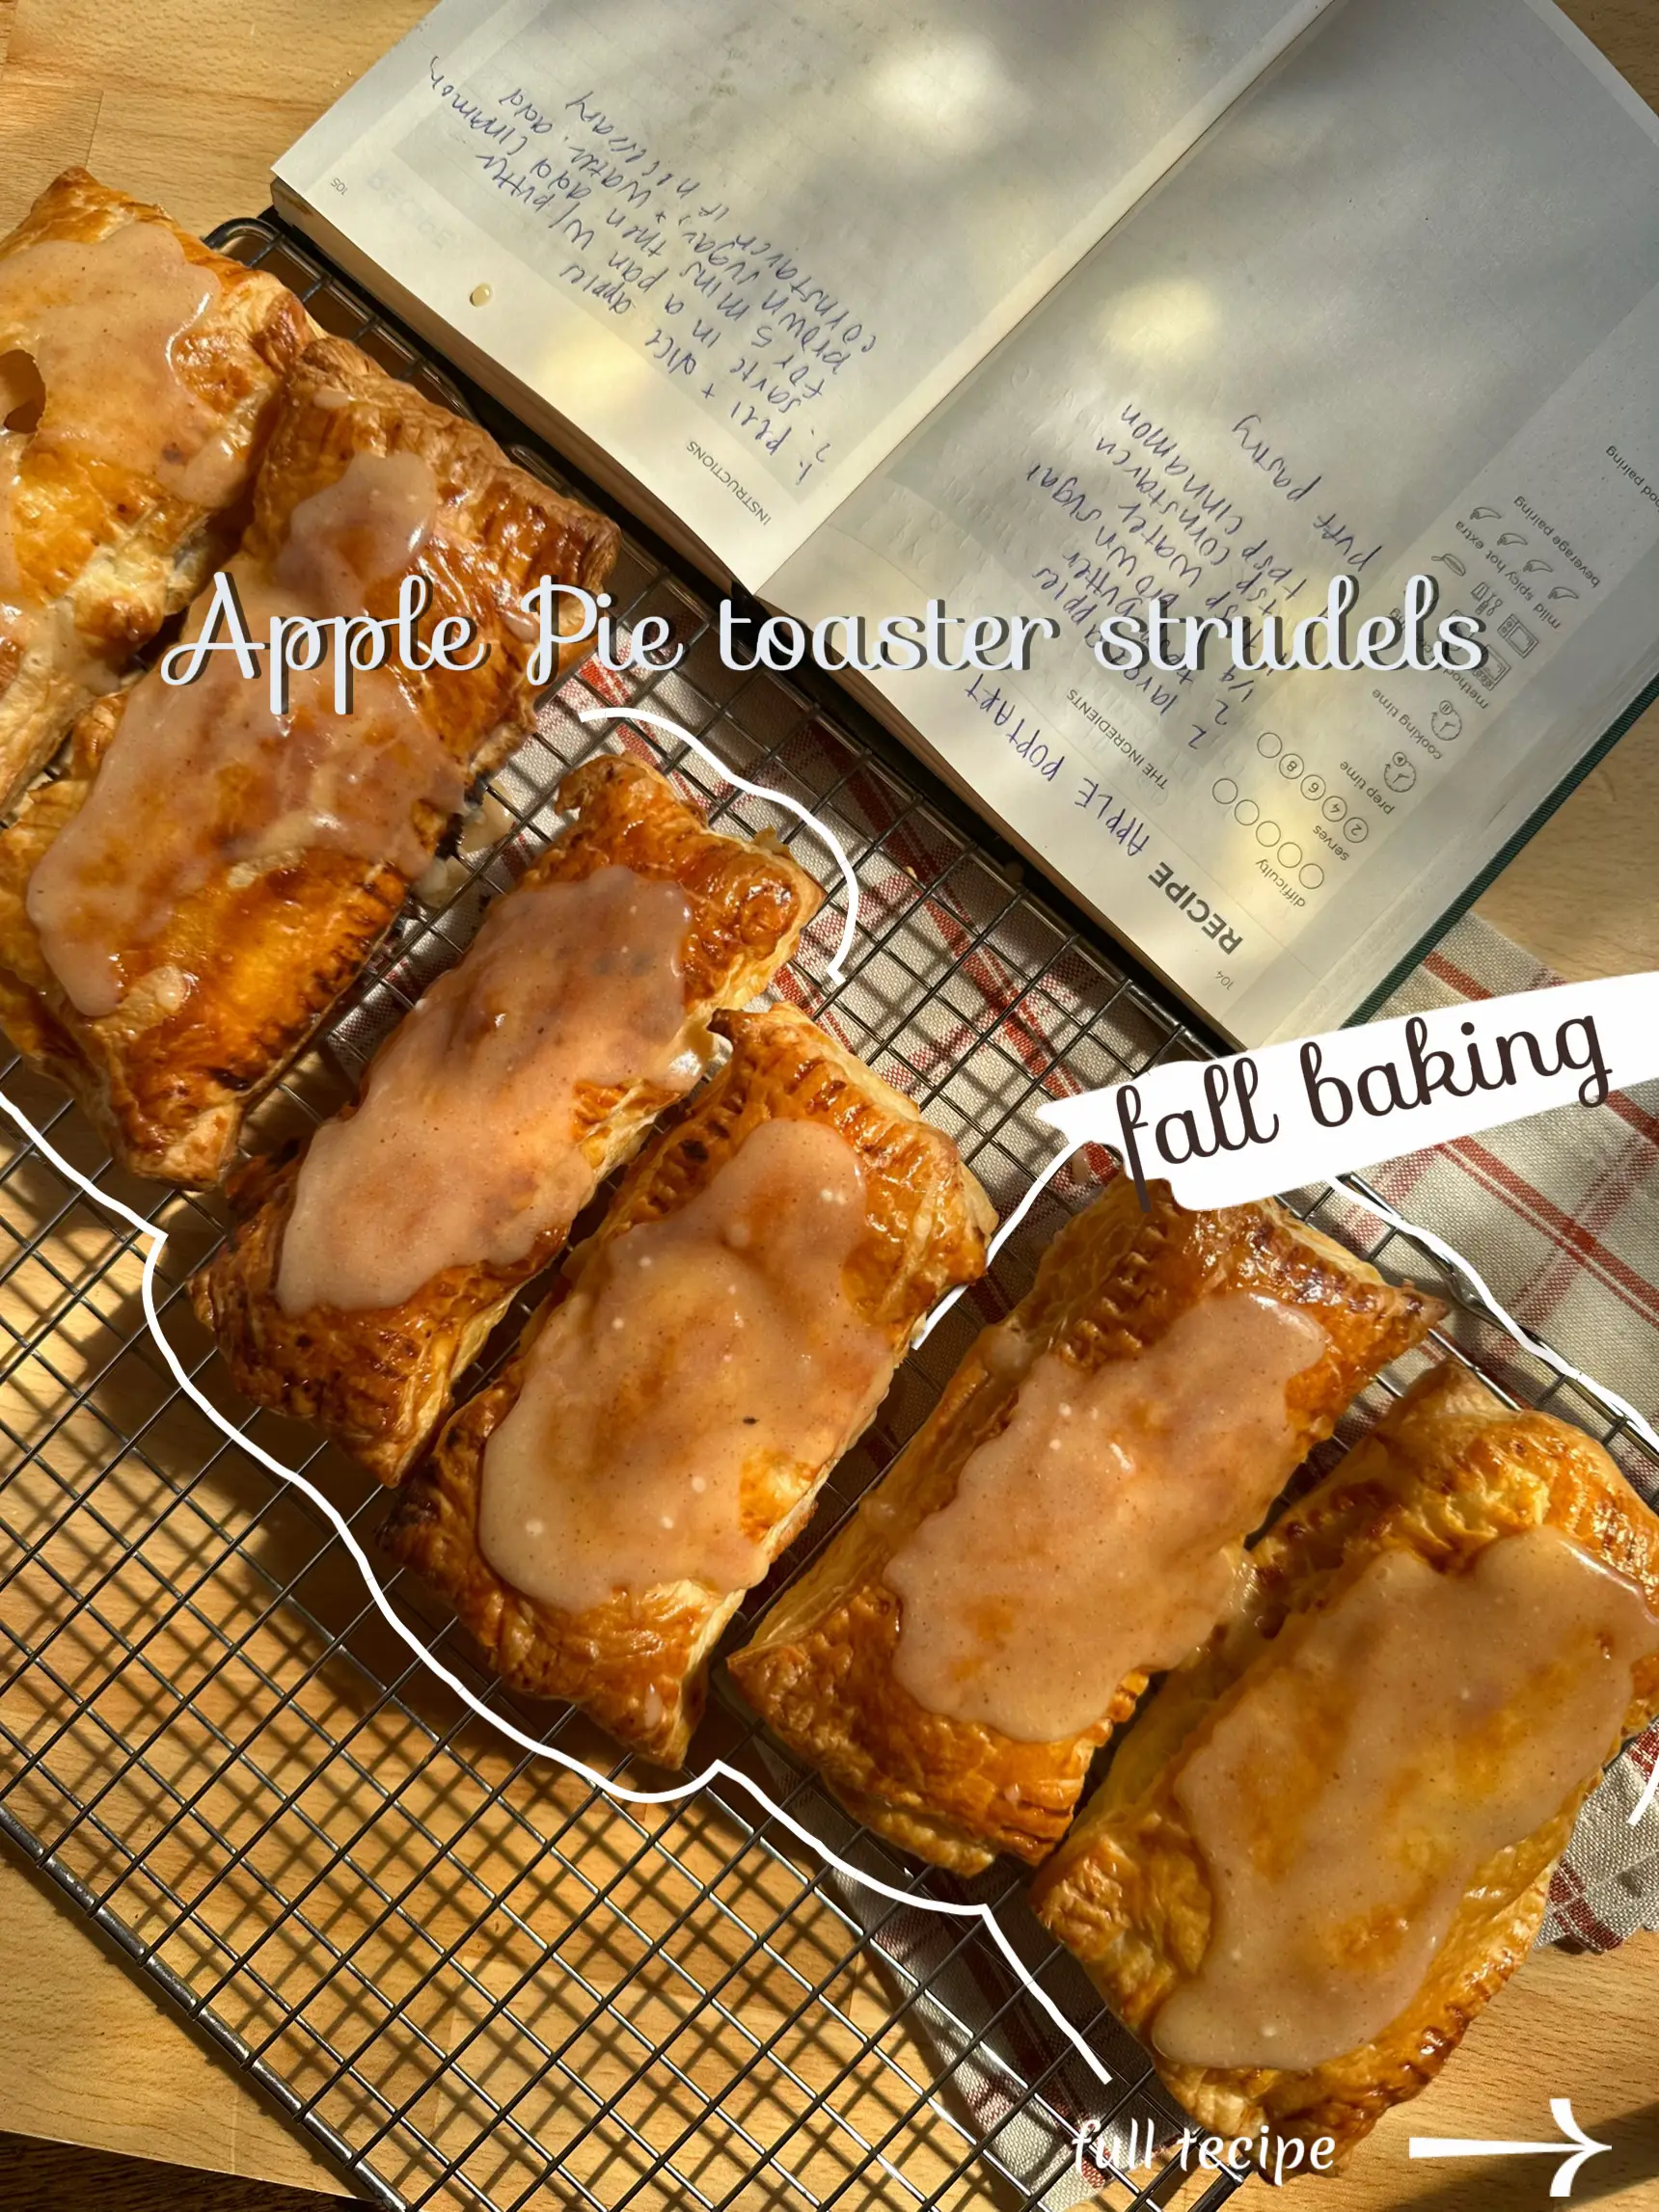 Apple Pie toaster strudels's images